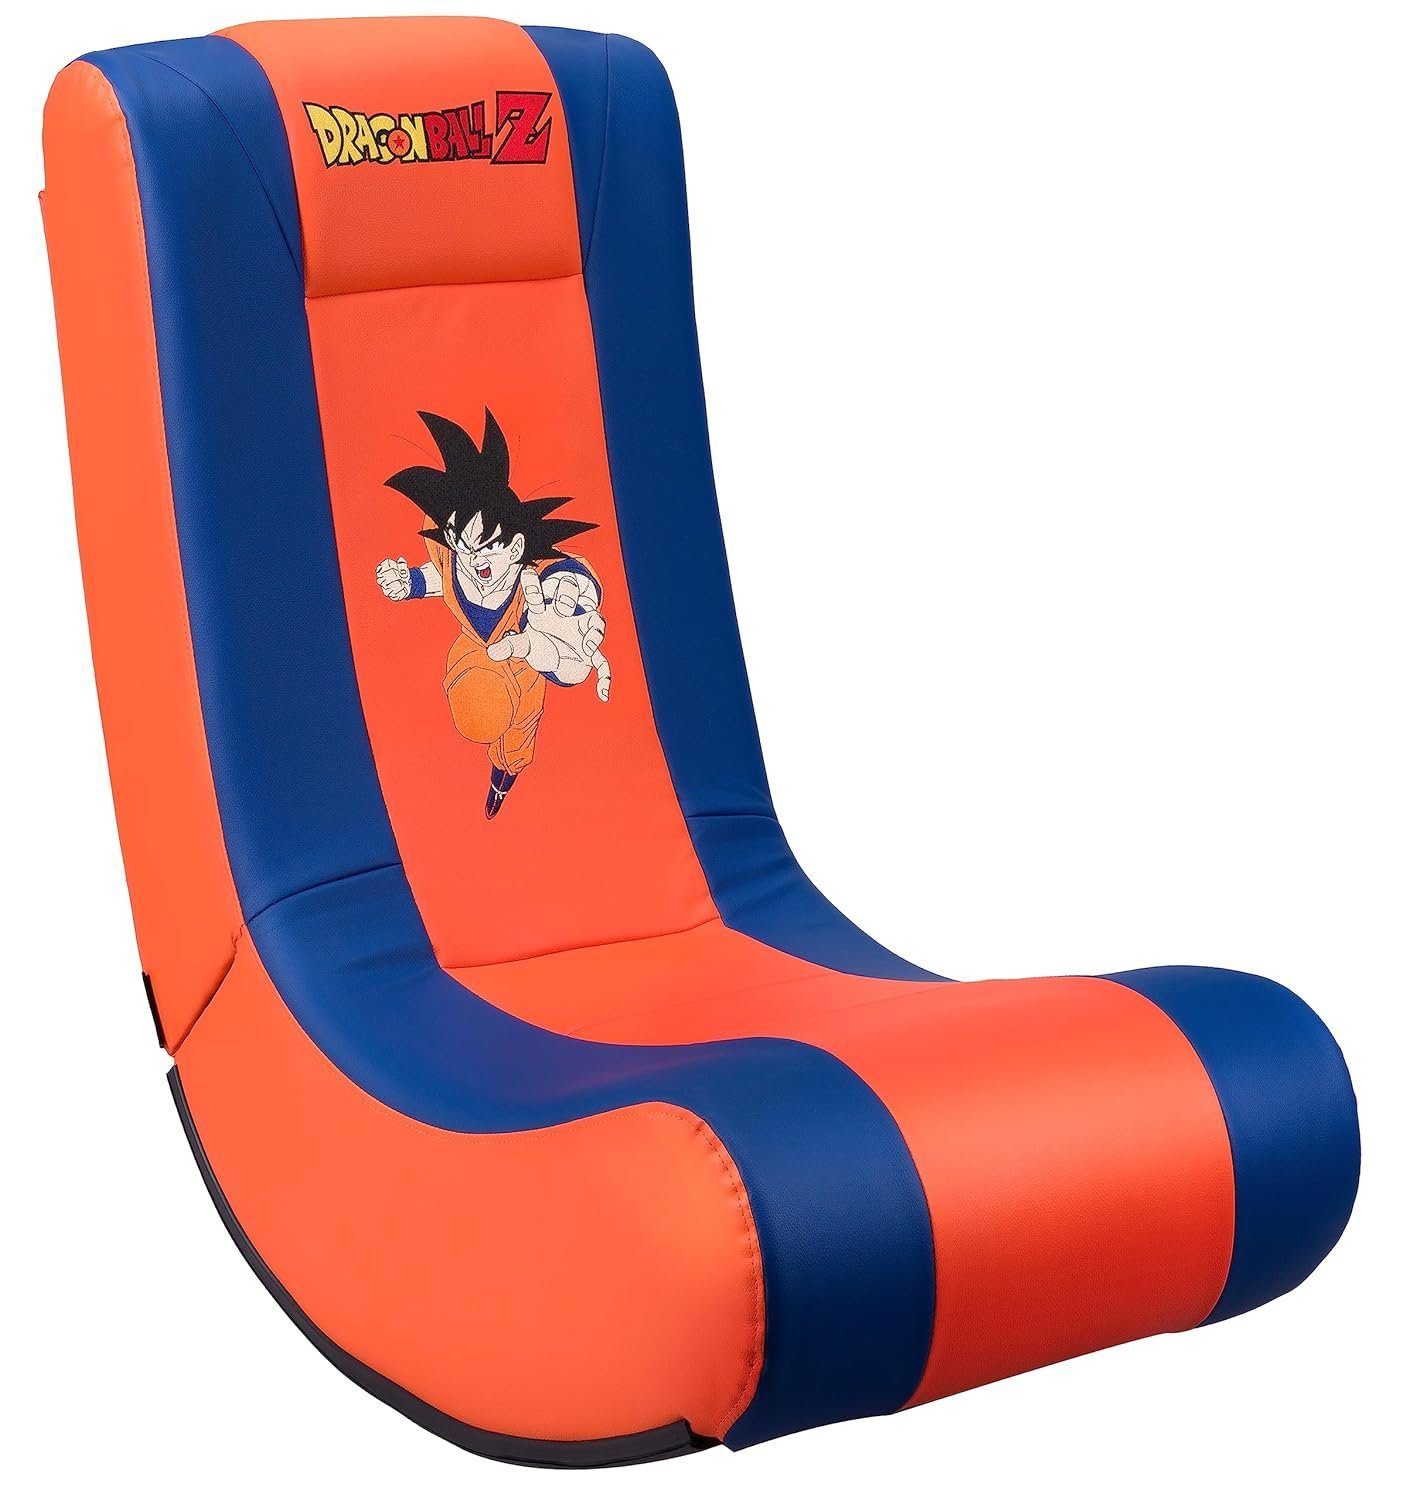 Gaming-Stuhl Gaming Chair Z Sessel (1 Junior Dragonball Rock'n'Seat Subsonic St) Stuhl / /